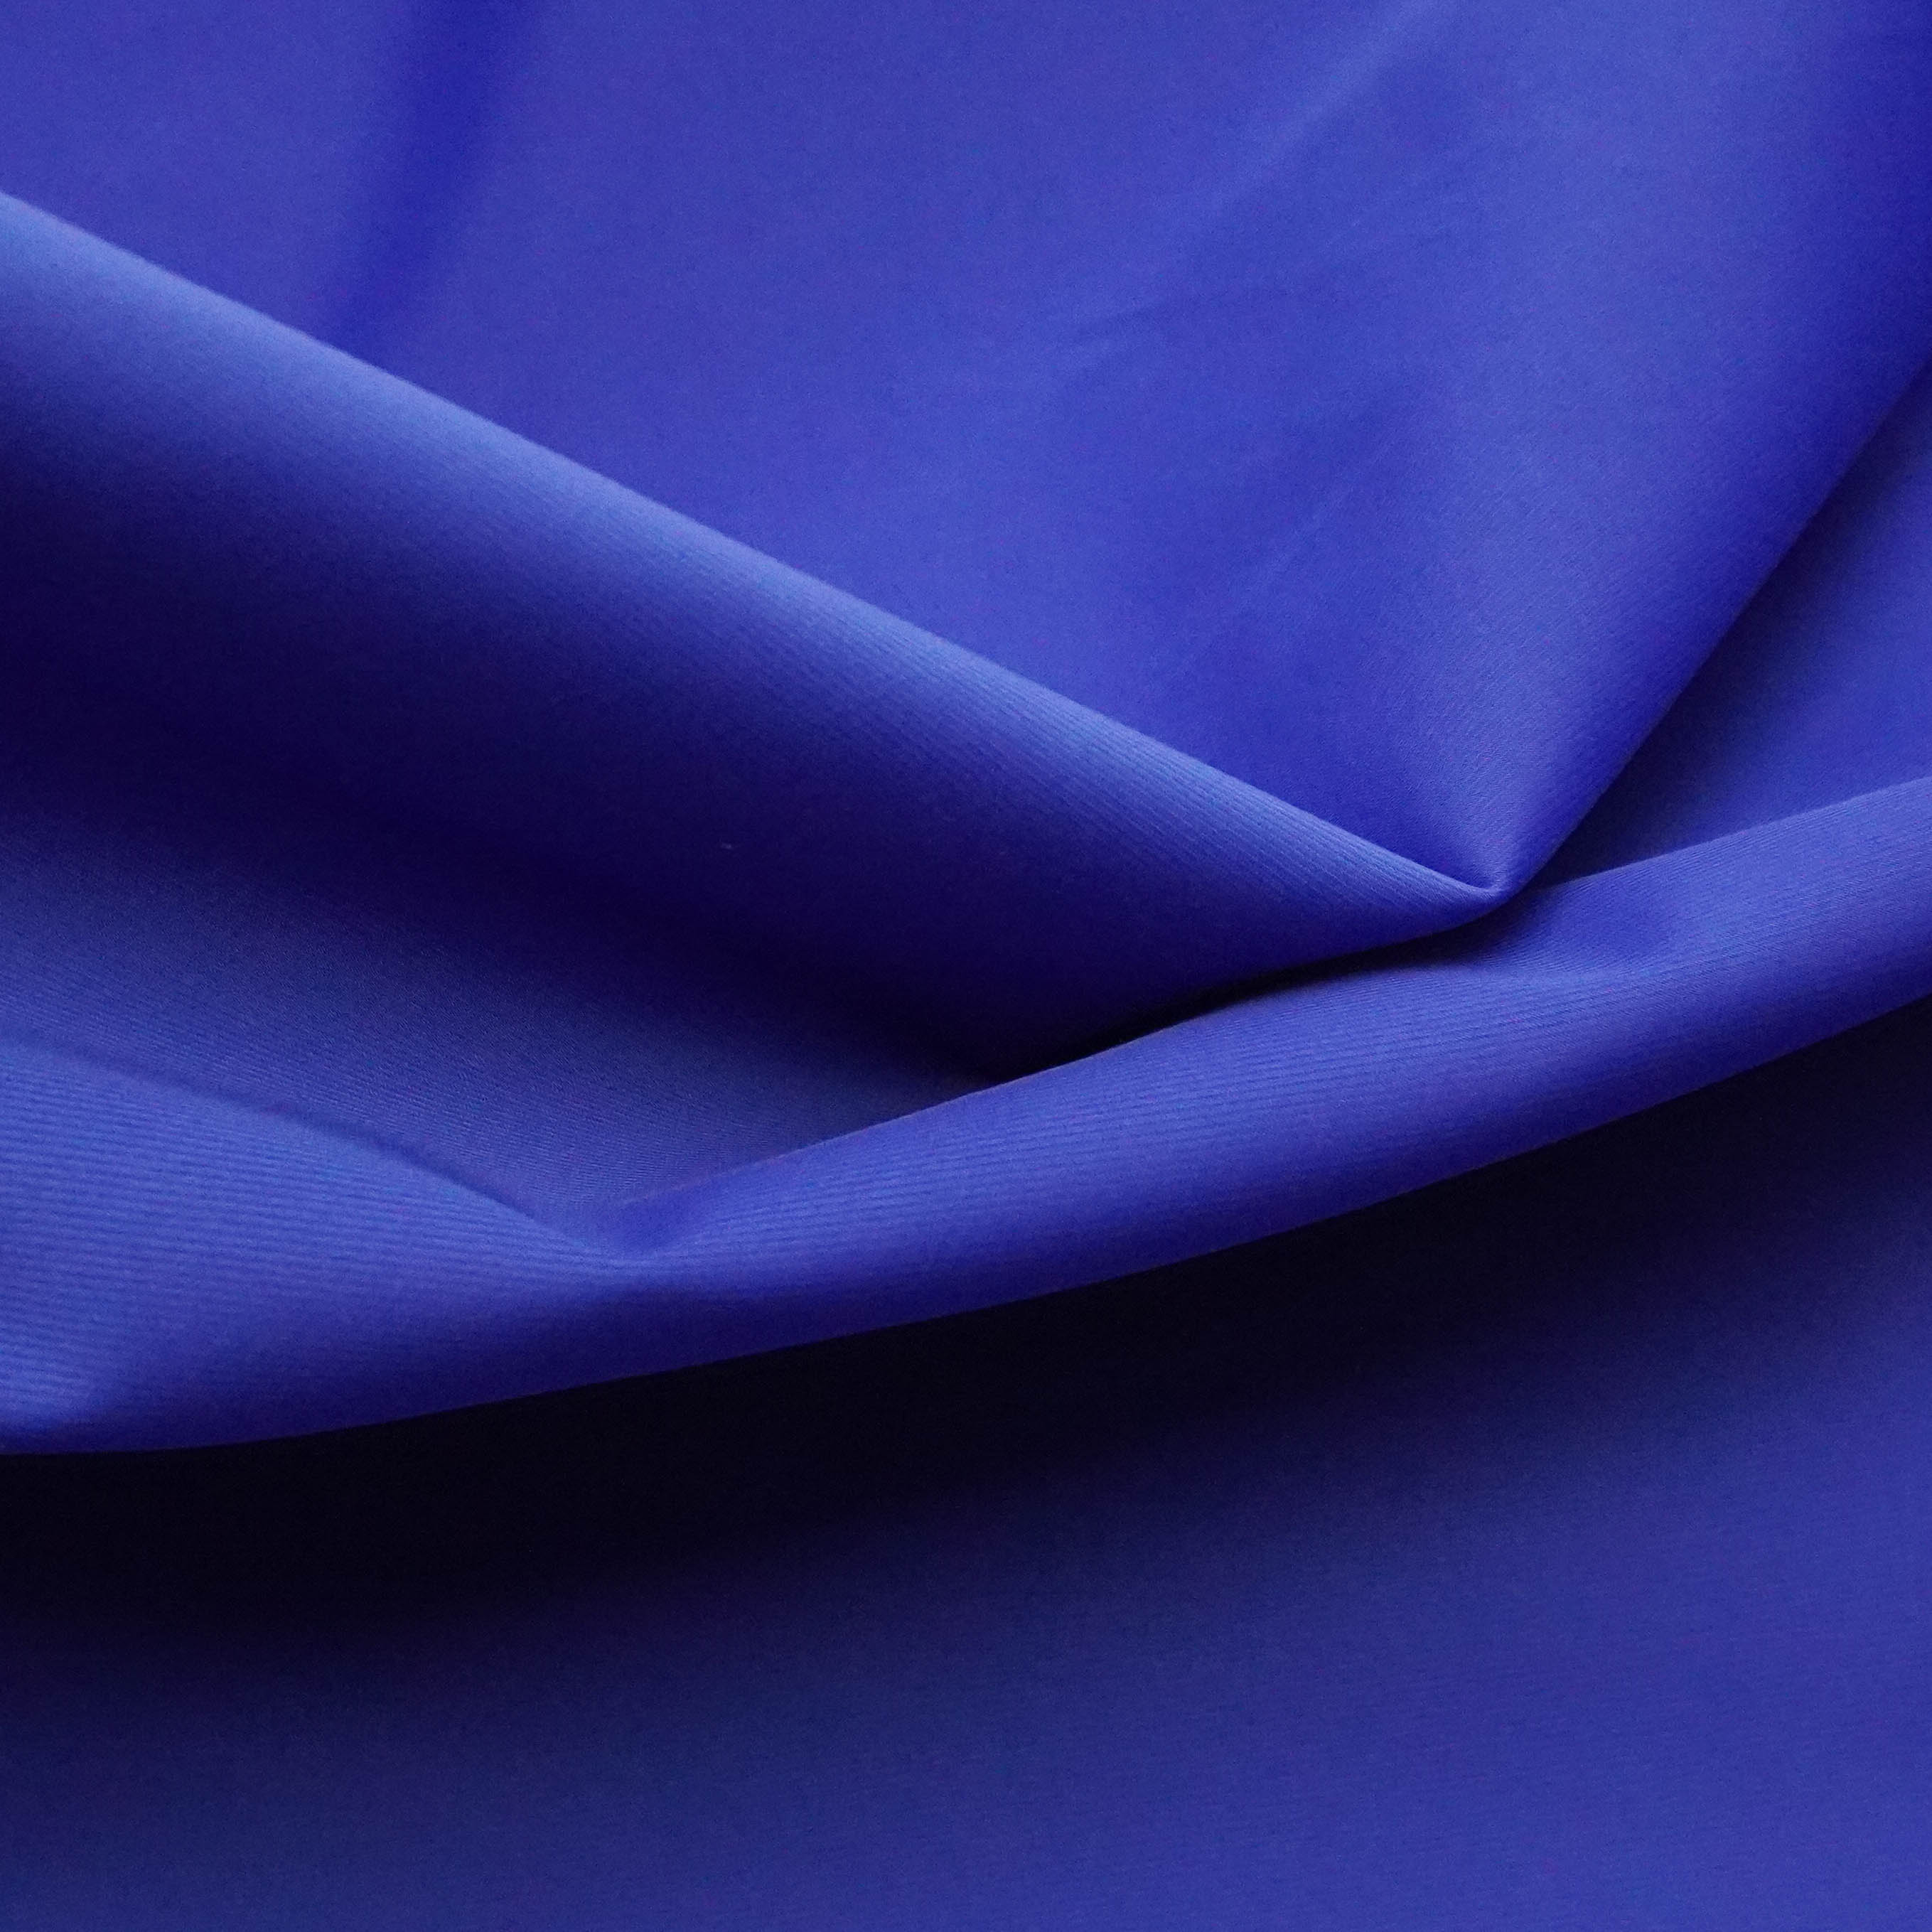 Tecido alfaiataria sarjada feminina azul royal